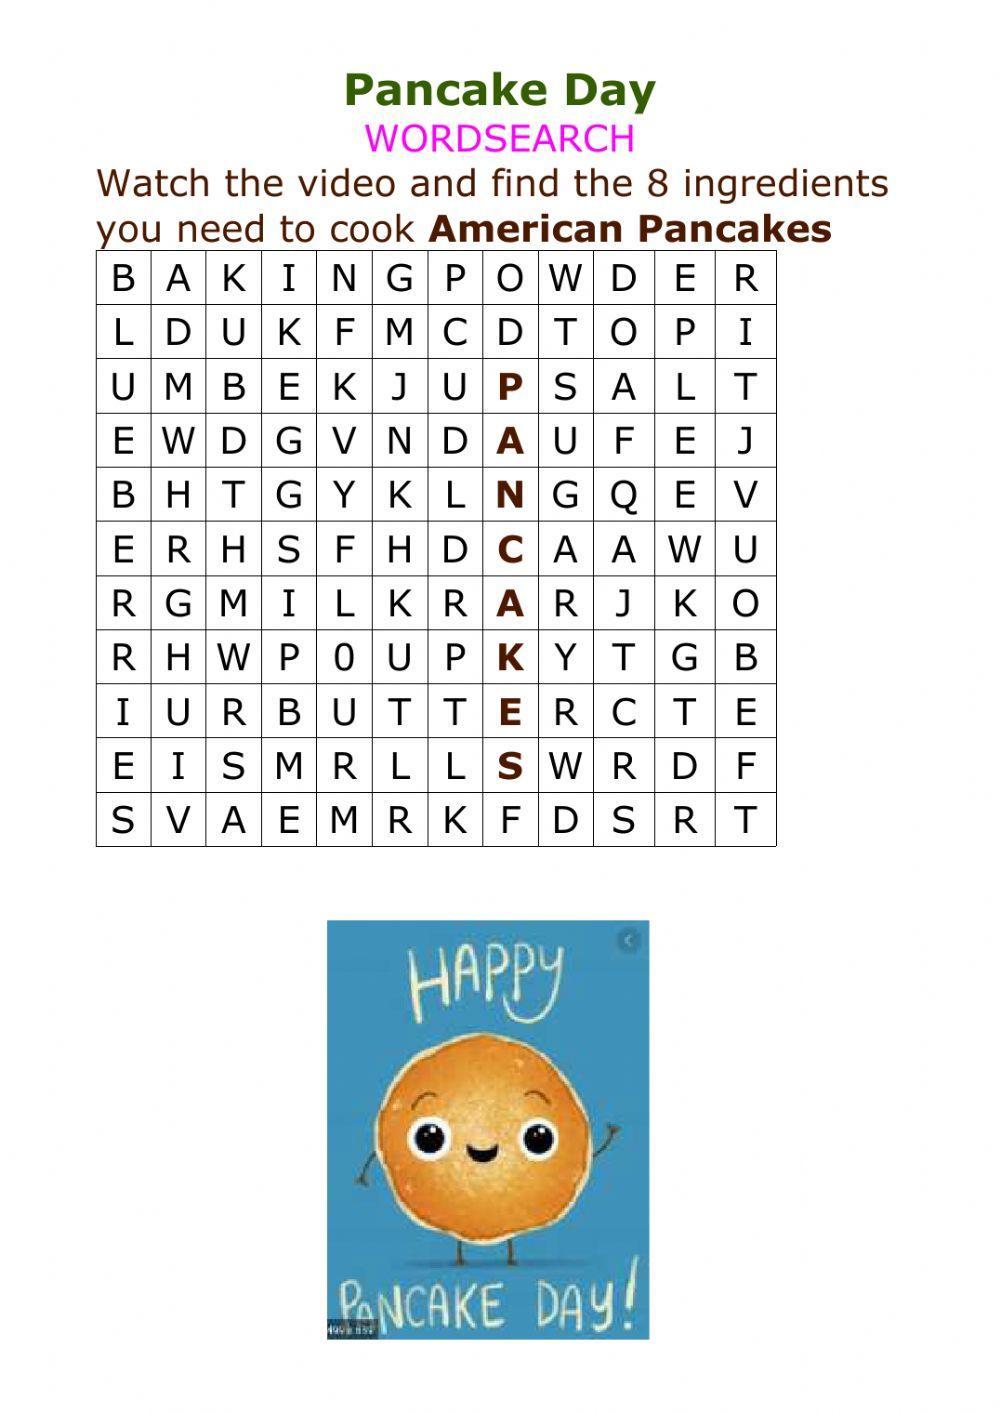 Pancake wordsearch recipe